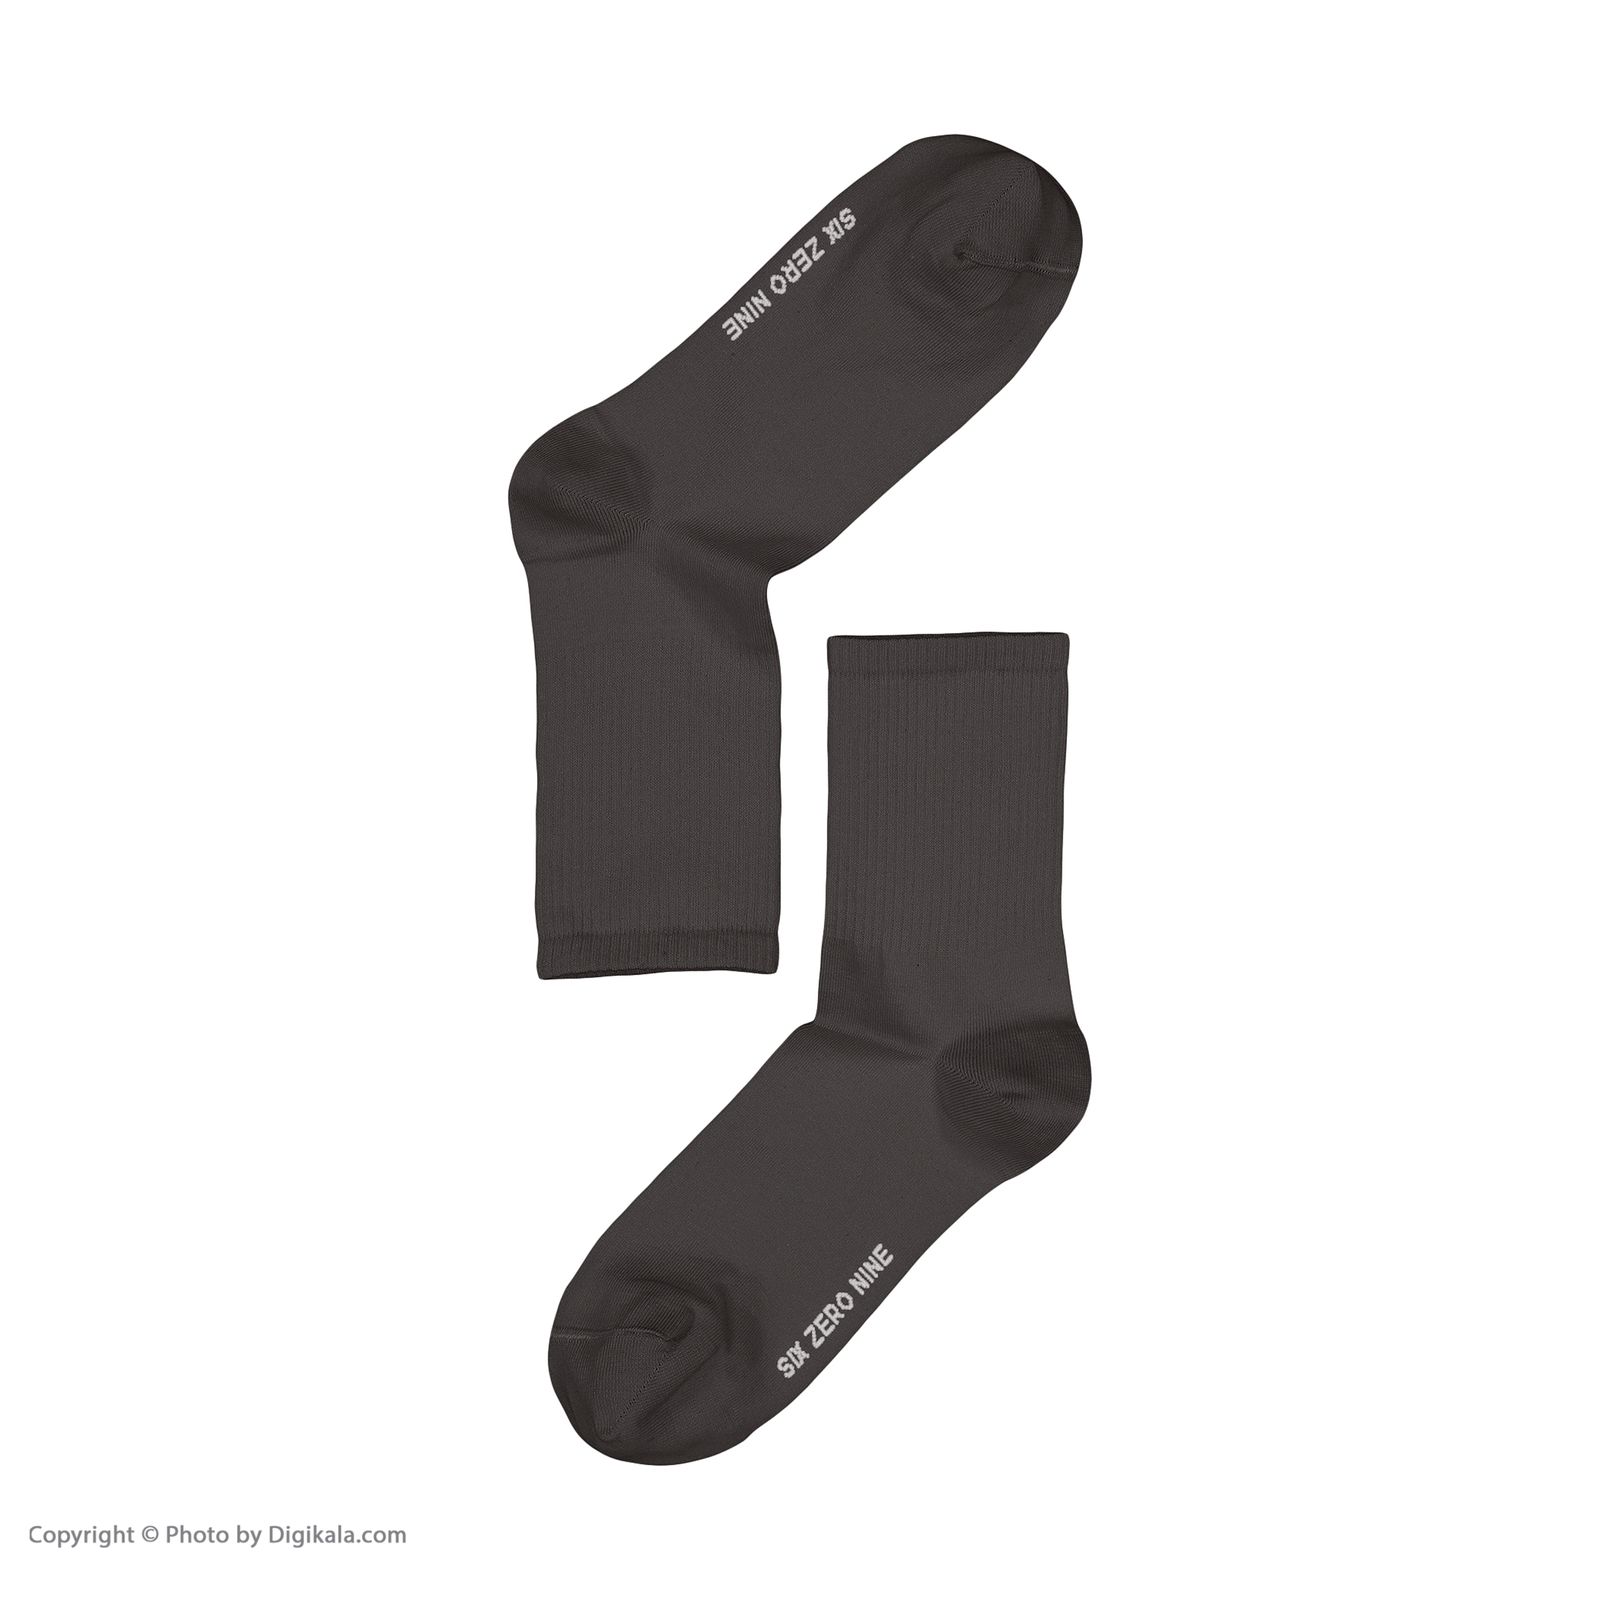 جوراب مردانه سیکس زیرو ناین مدل 1107-92 بسته 3 عددی -  - 5